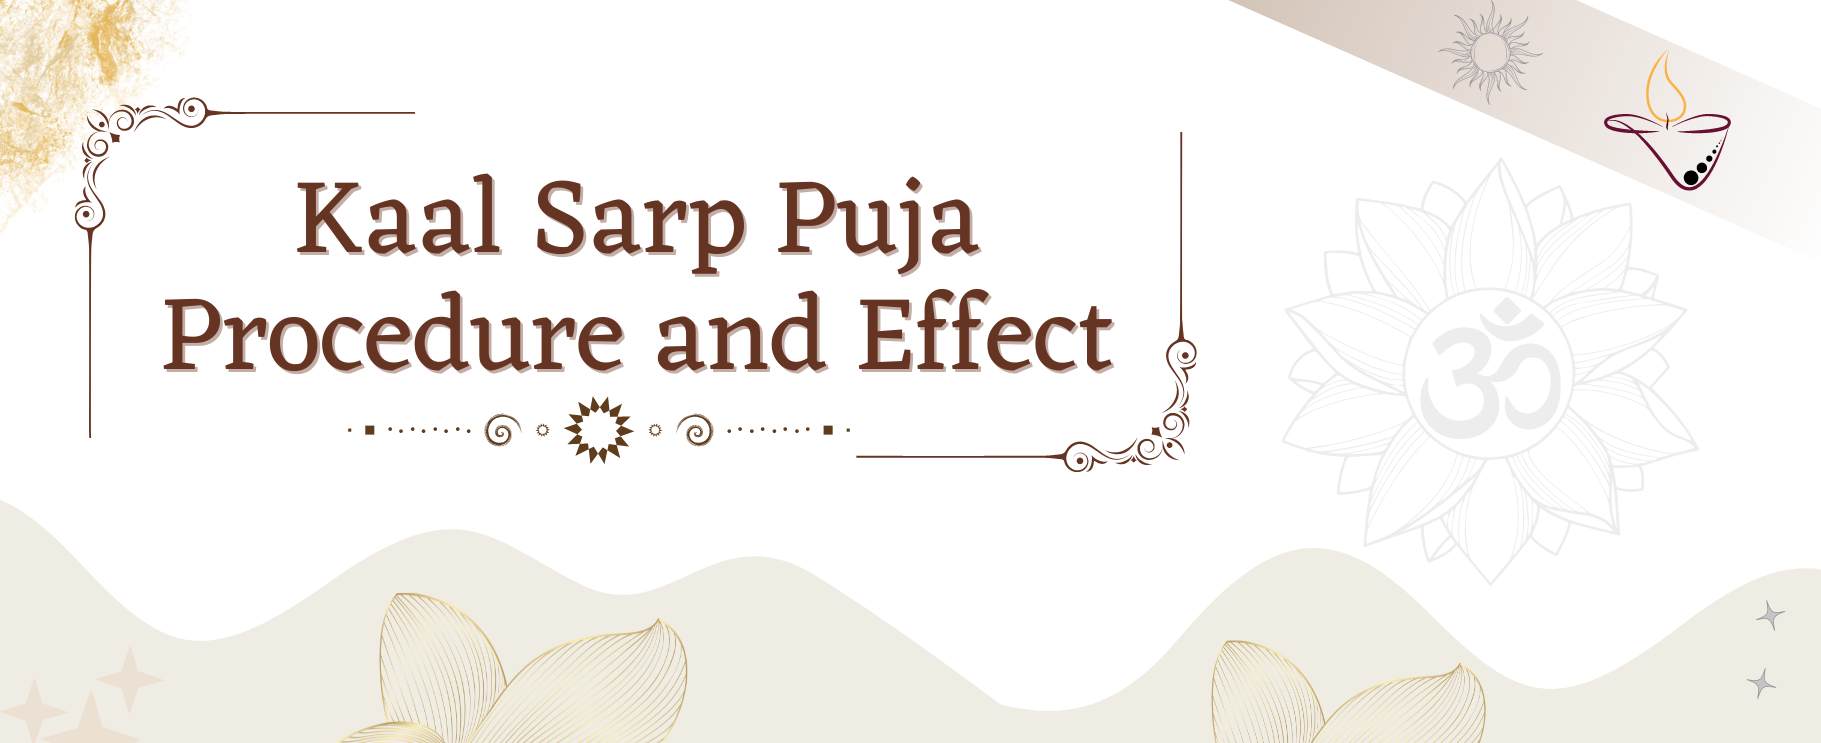 Kaal-Sarp-Puja-Procedure-and-Effect